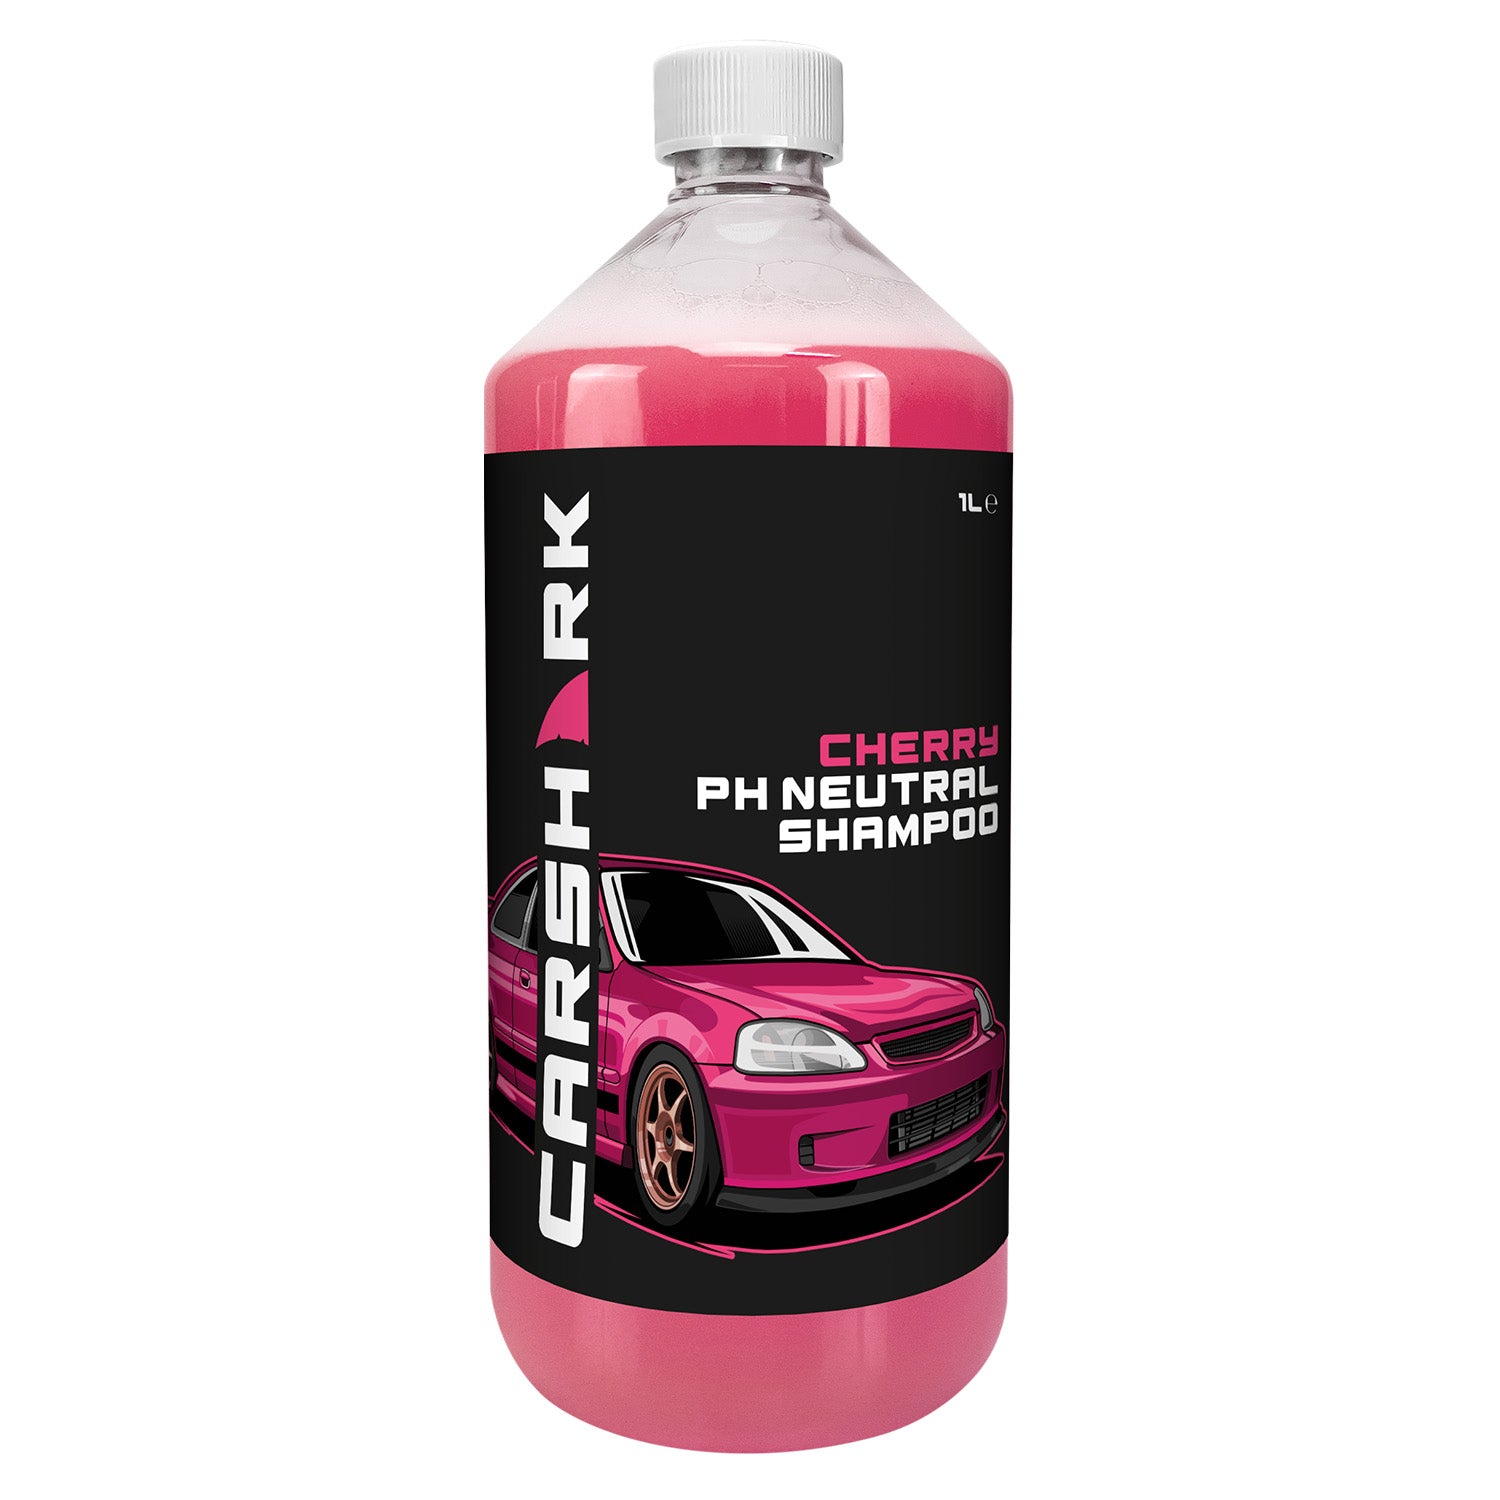 CARSHARK PH Neutral Car Shampoo 2 x 1 Litre - Concentrate - Cherry Blossom